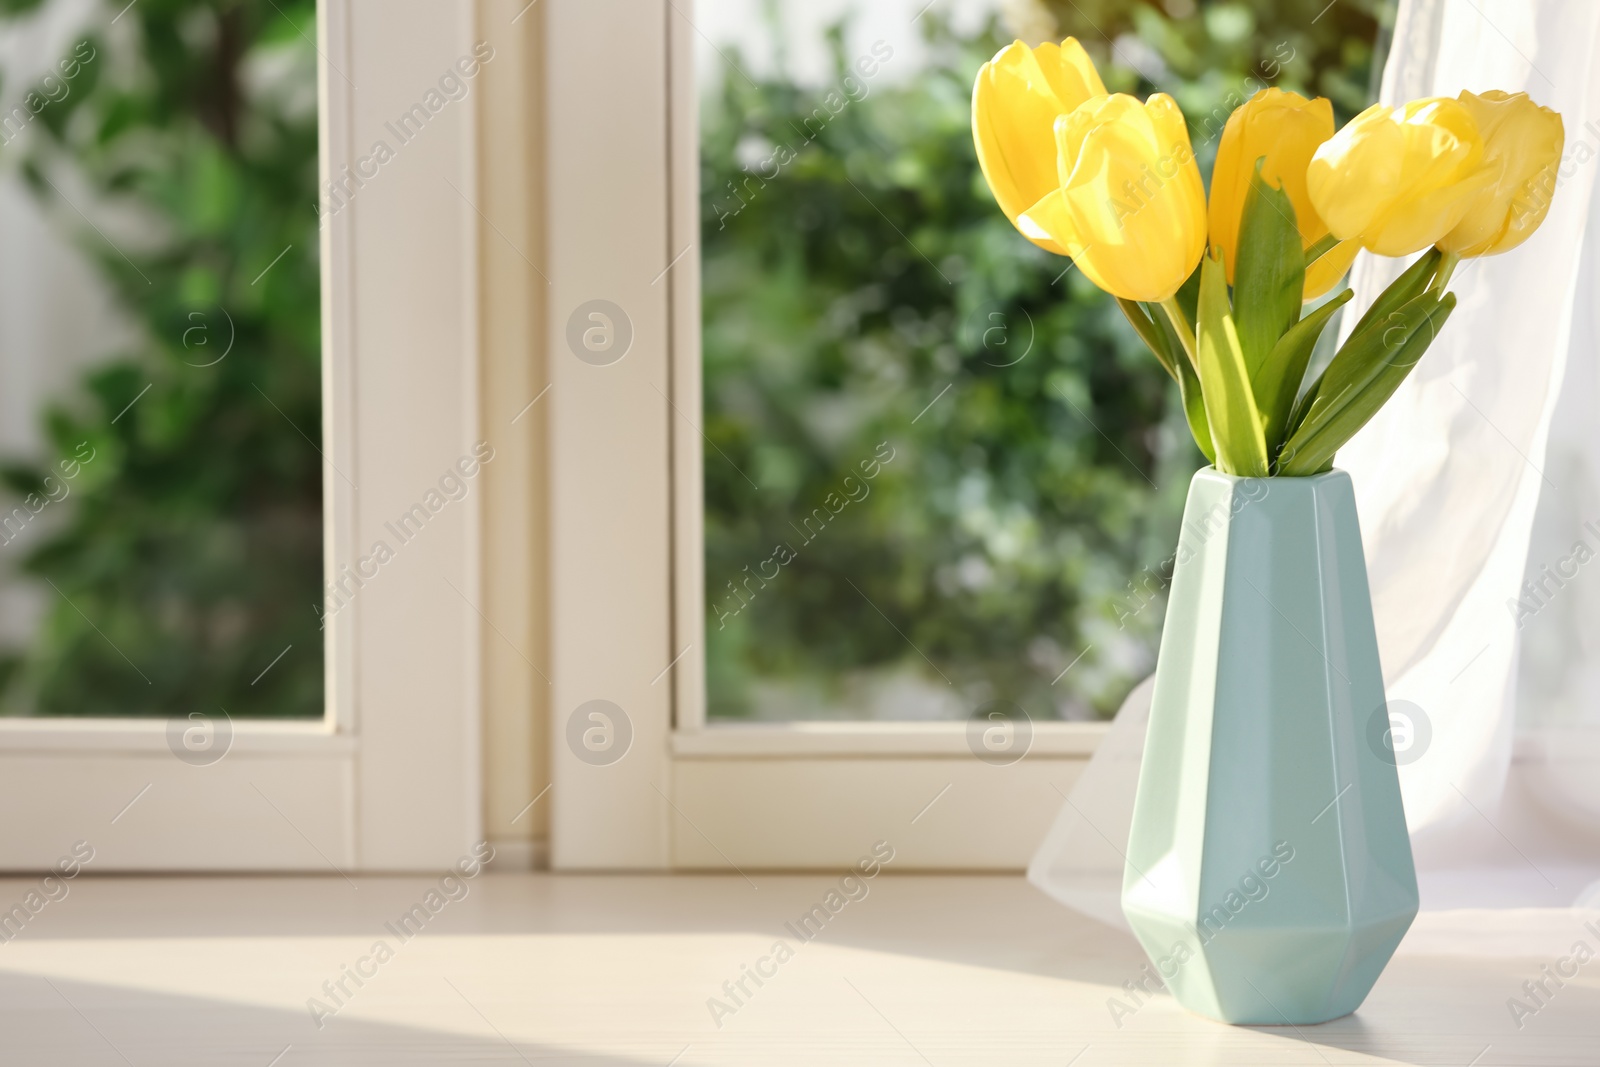 Photo of Beautiful fresh yellow tulips on window sill indoors. Spring flowers